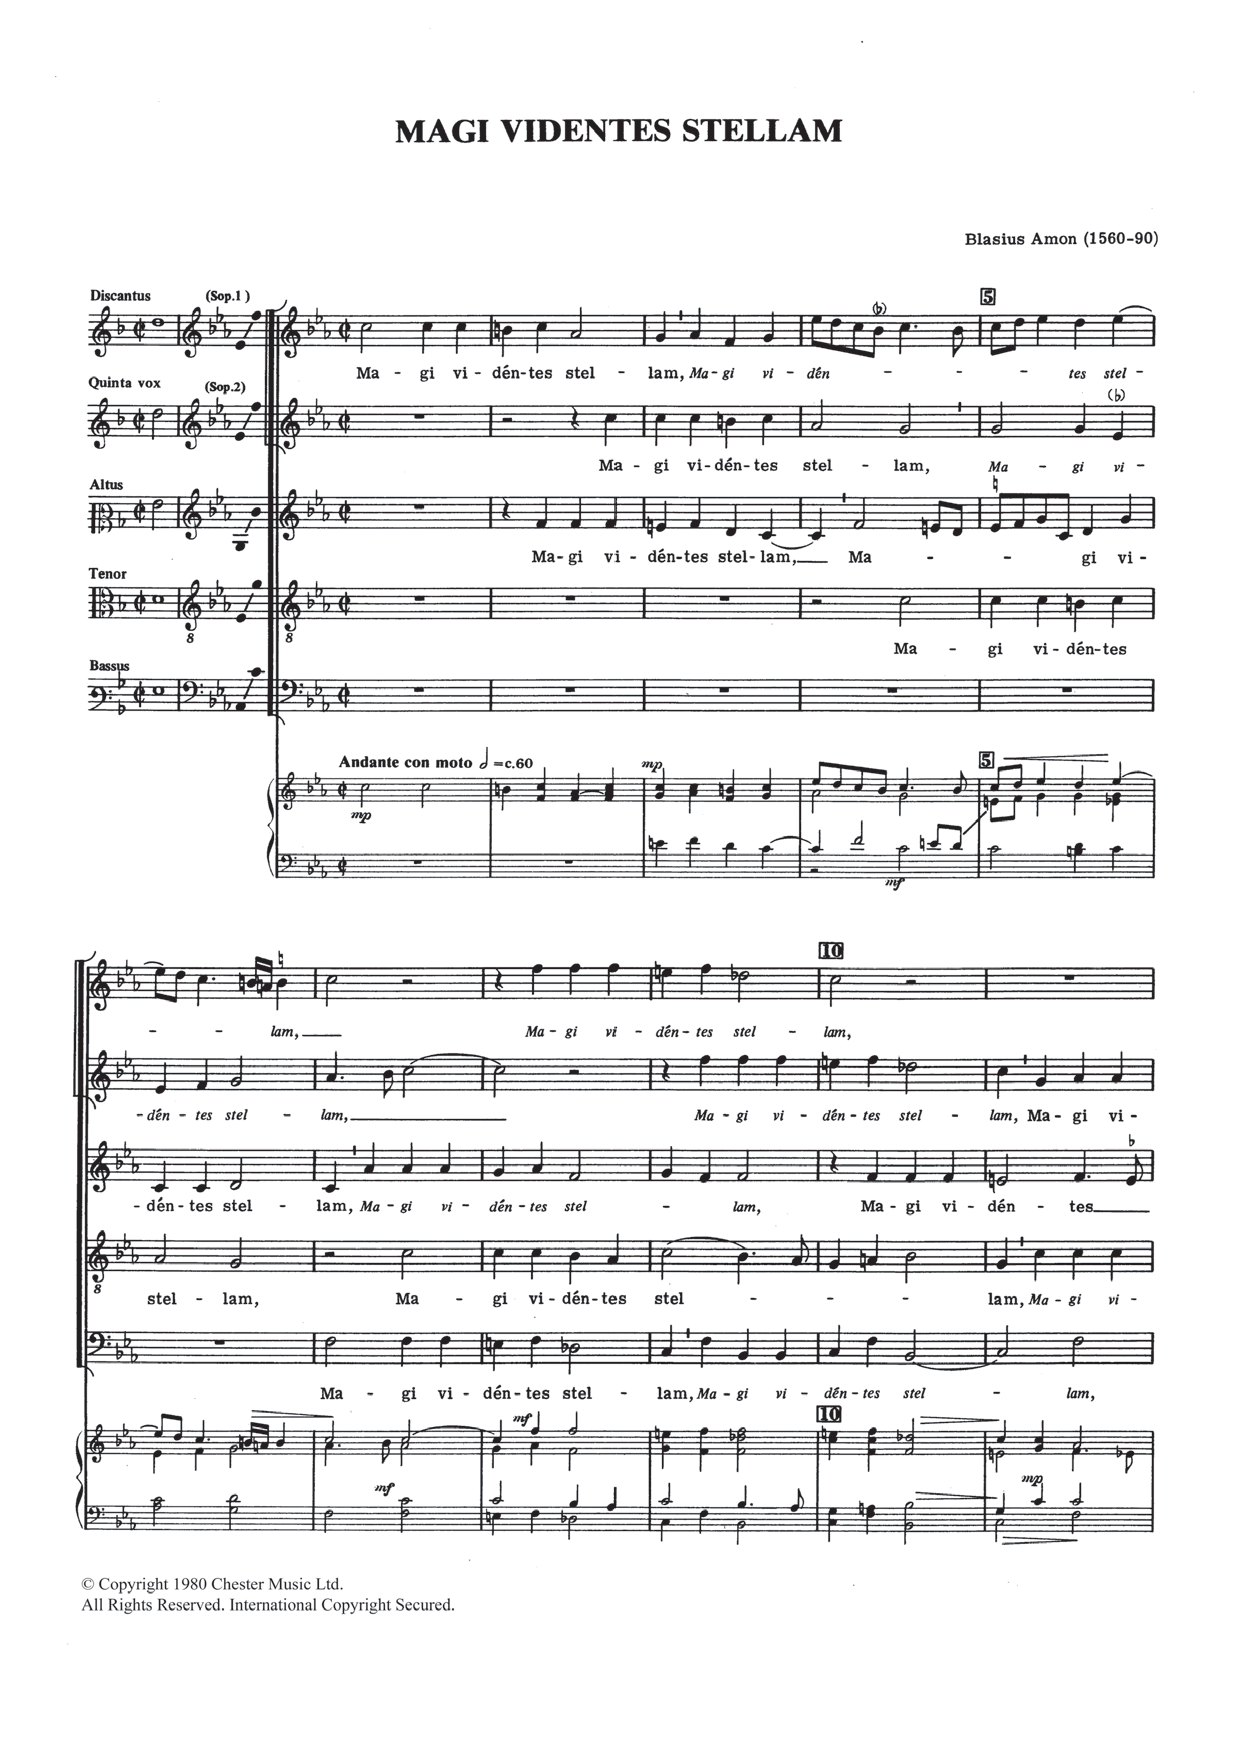 Magi Videntes Stellam (SATB Choir) von Blasius Amon